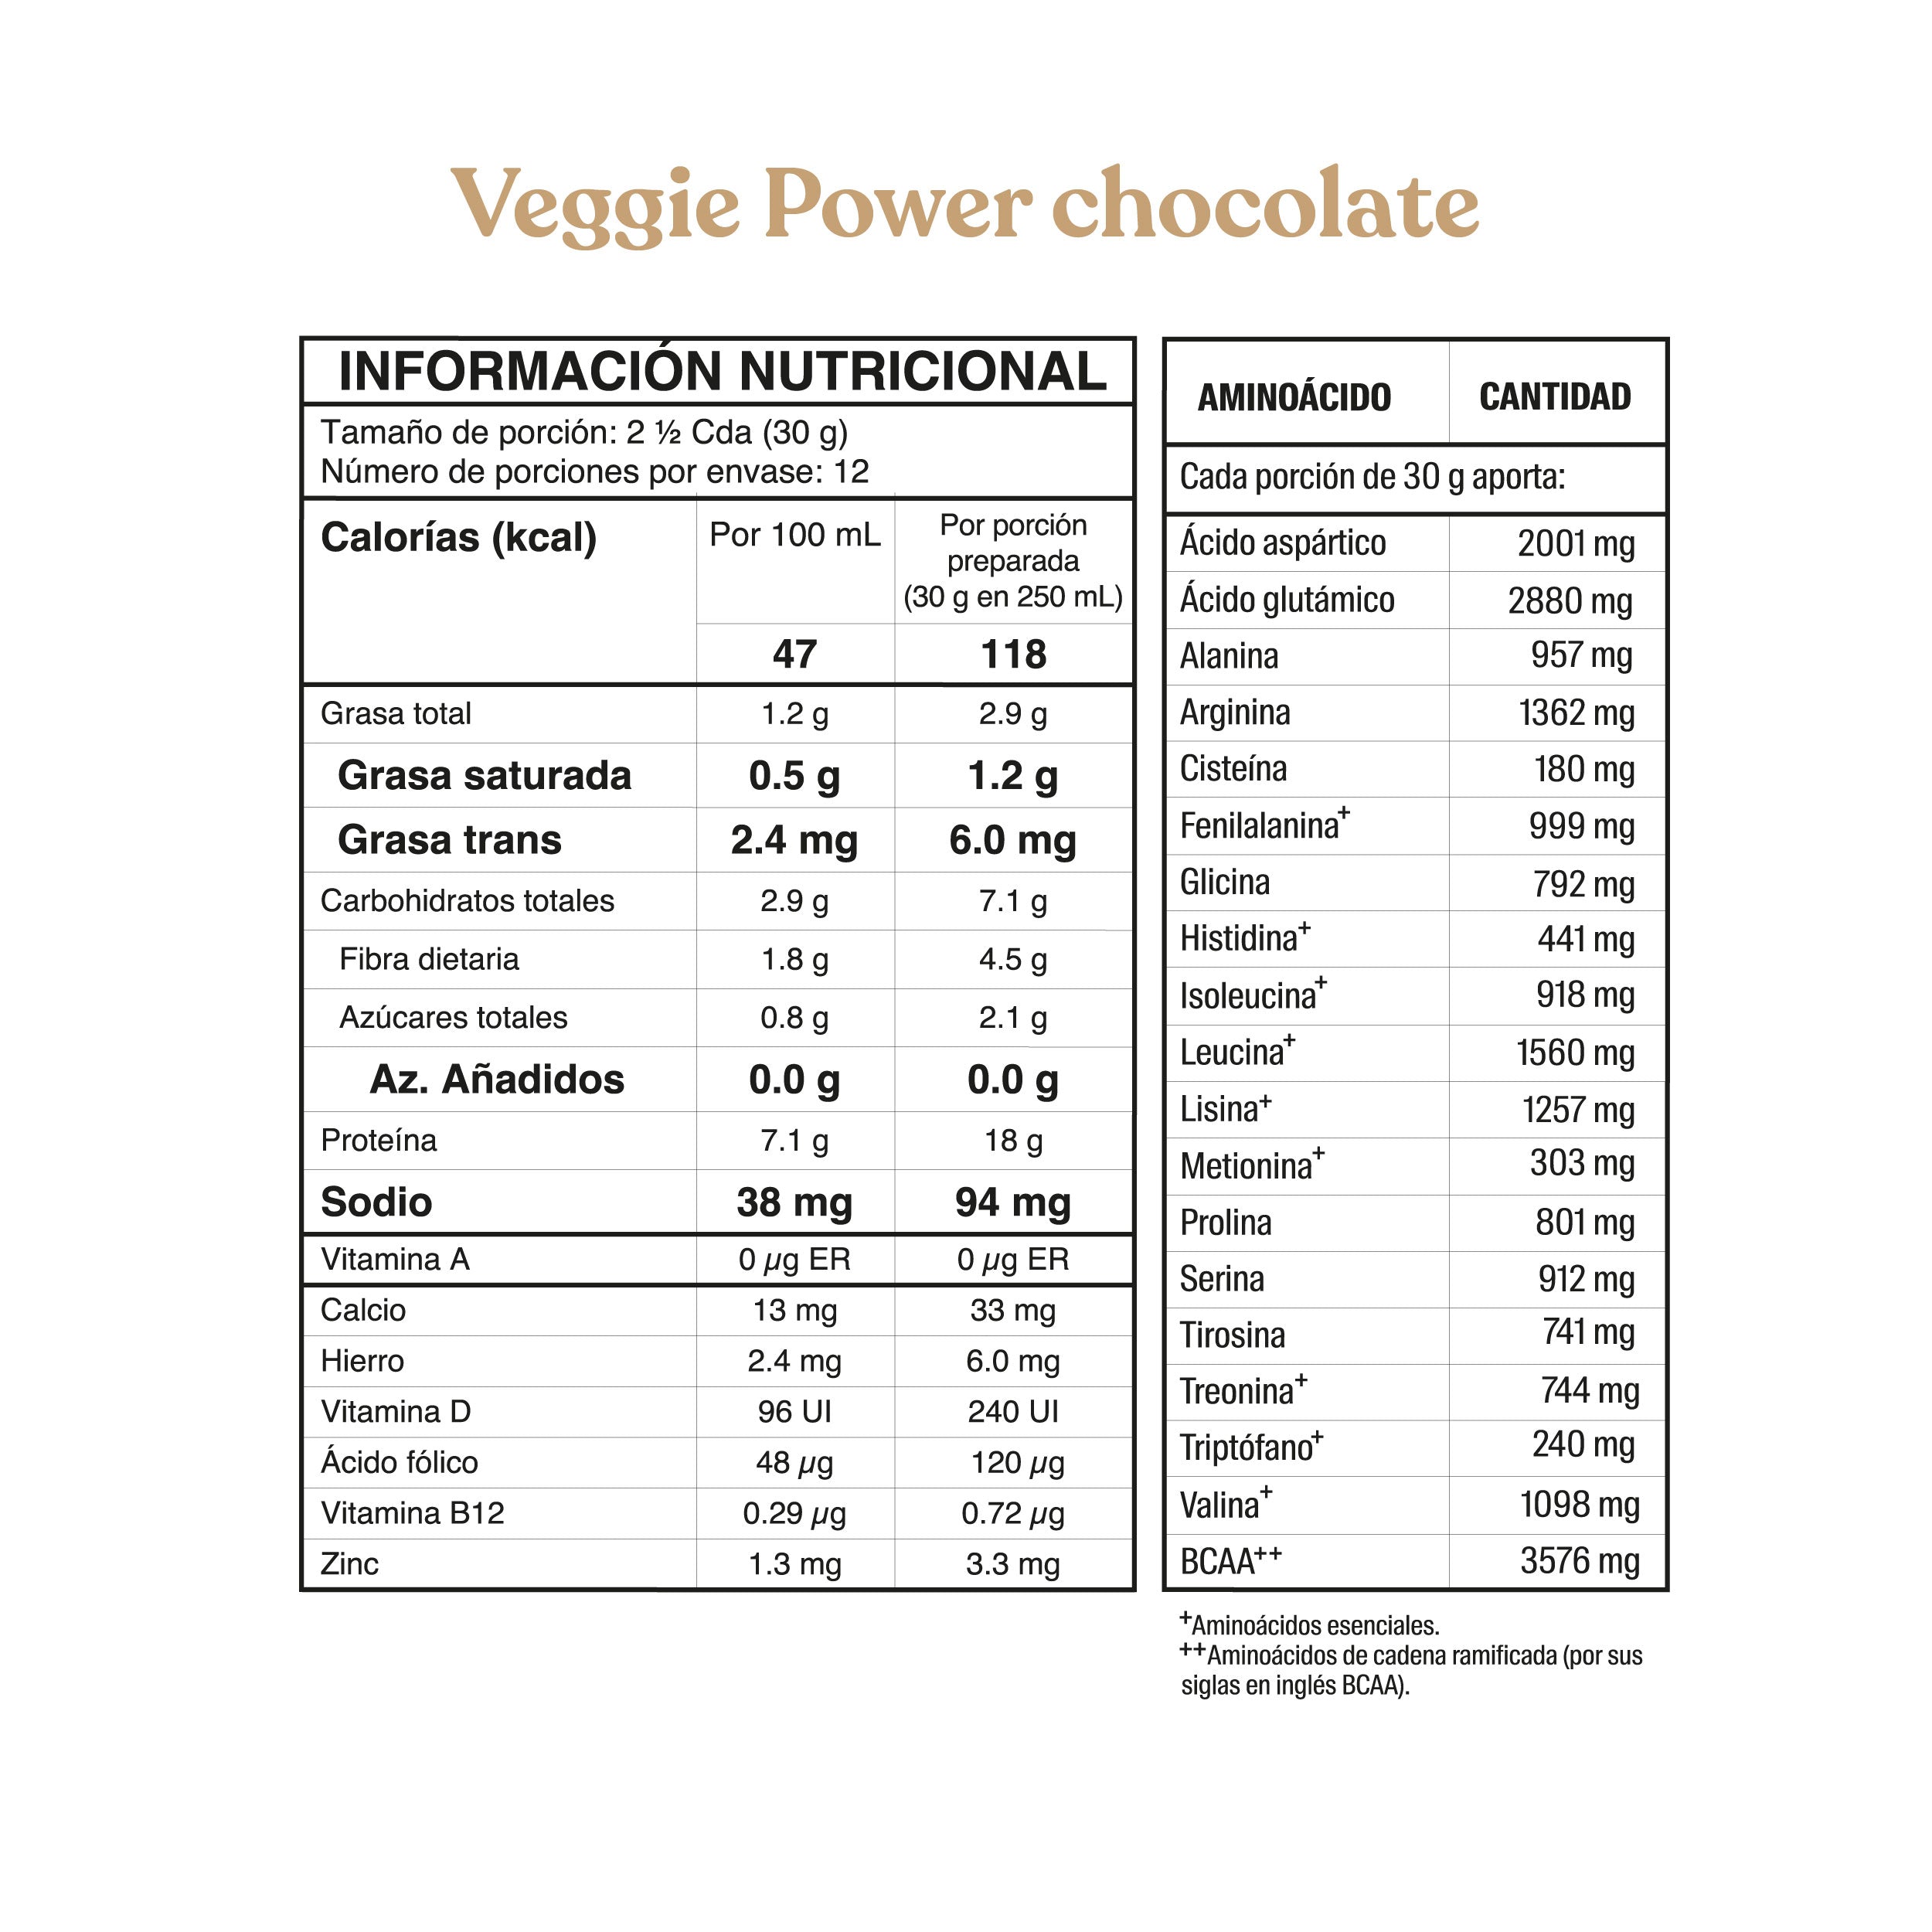 Veggie Powder chocolate mini 360gr